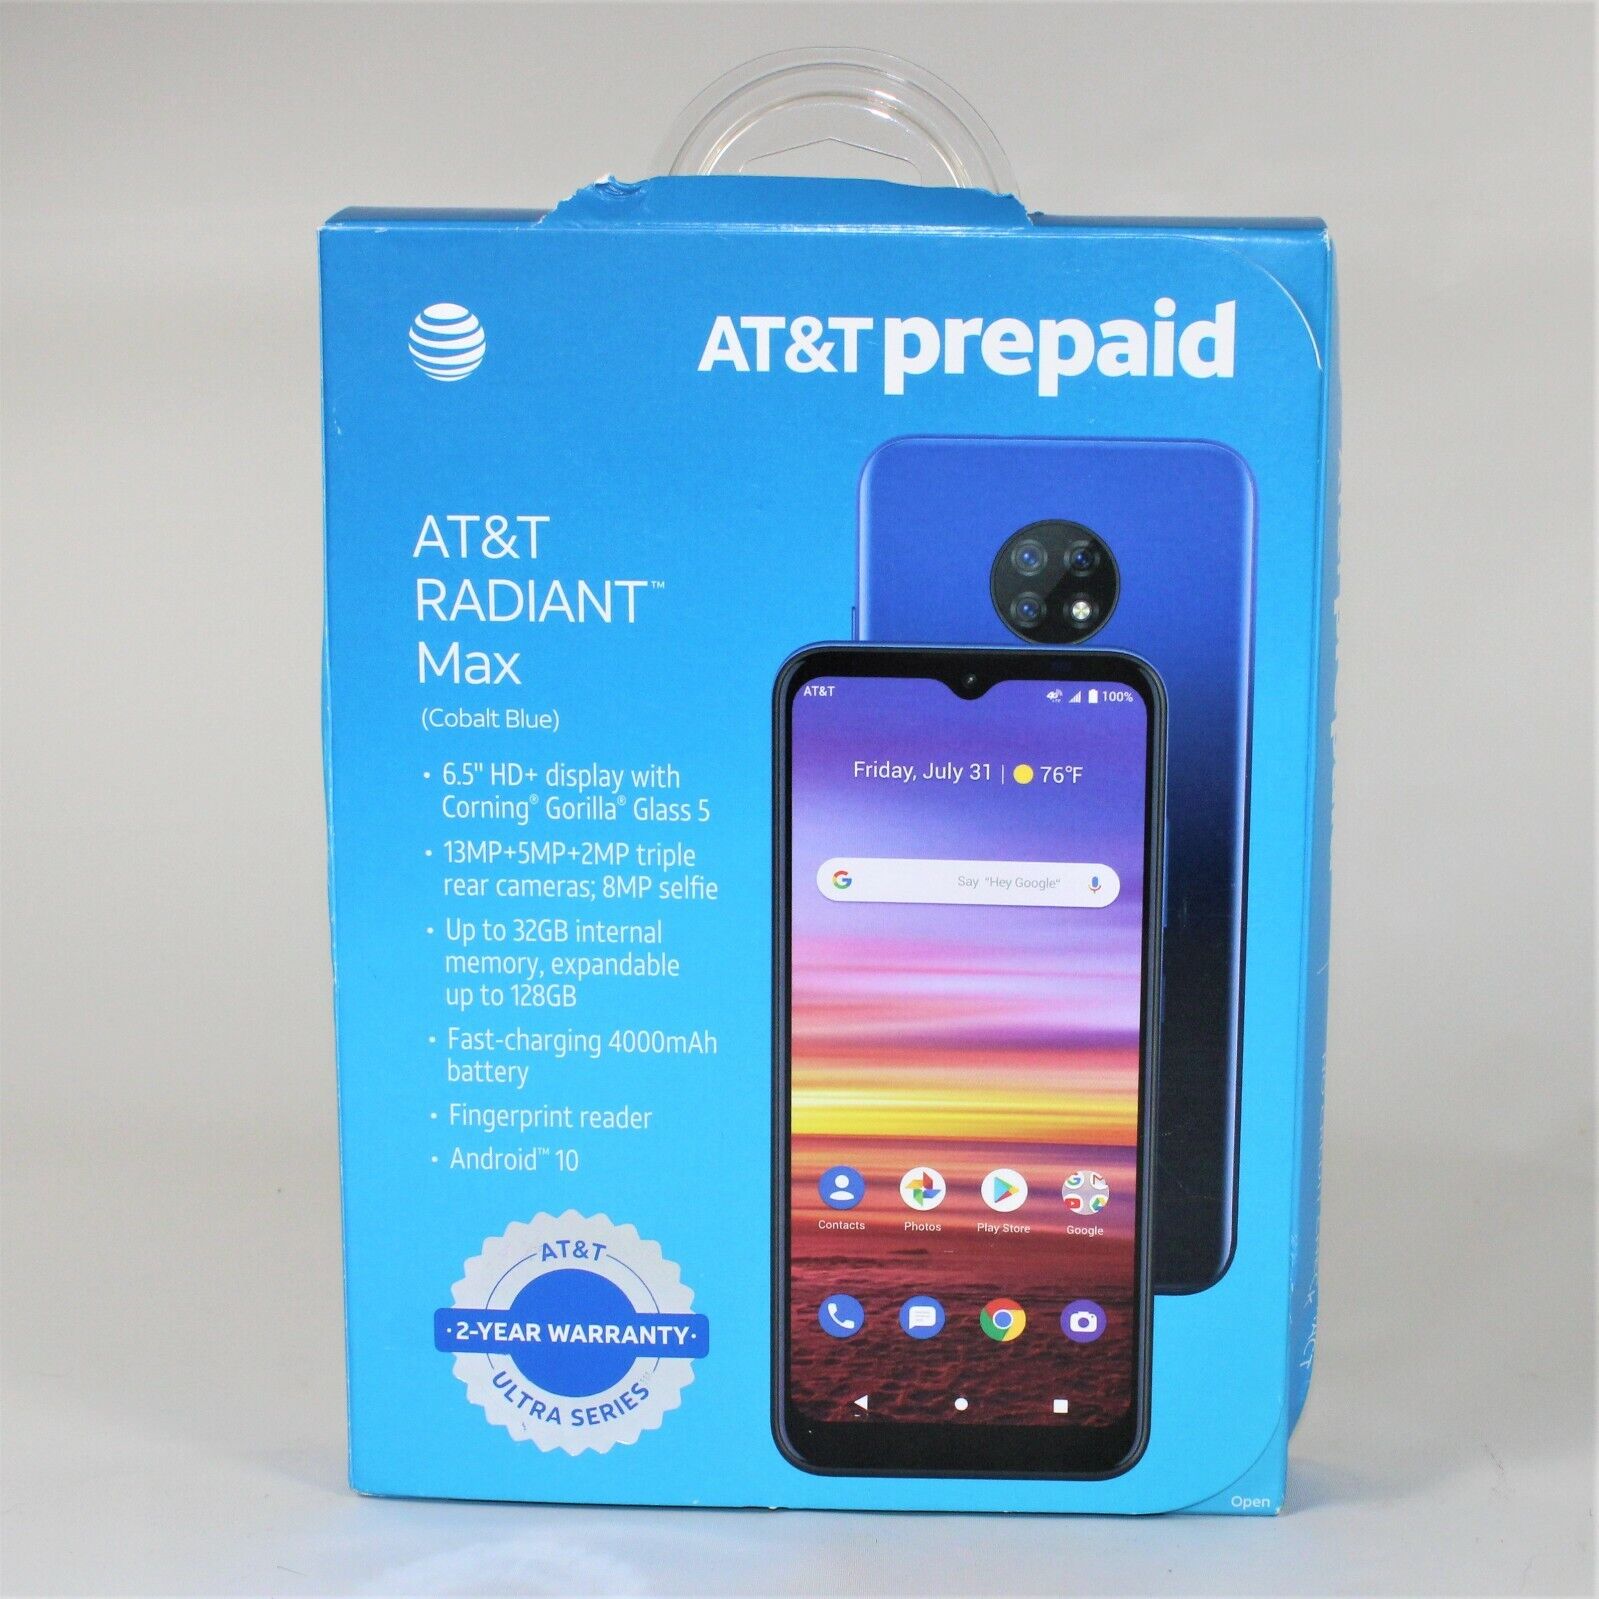 AT&T Prepaid Smartphone AT&T Radiant Max, Cobalt Blue (SN: 244865638040583362)